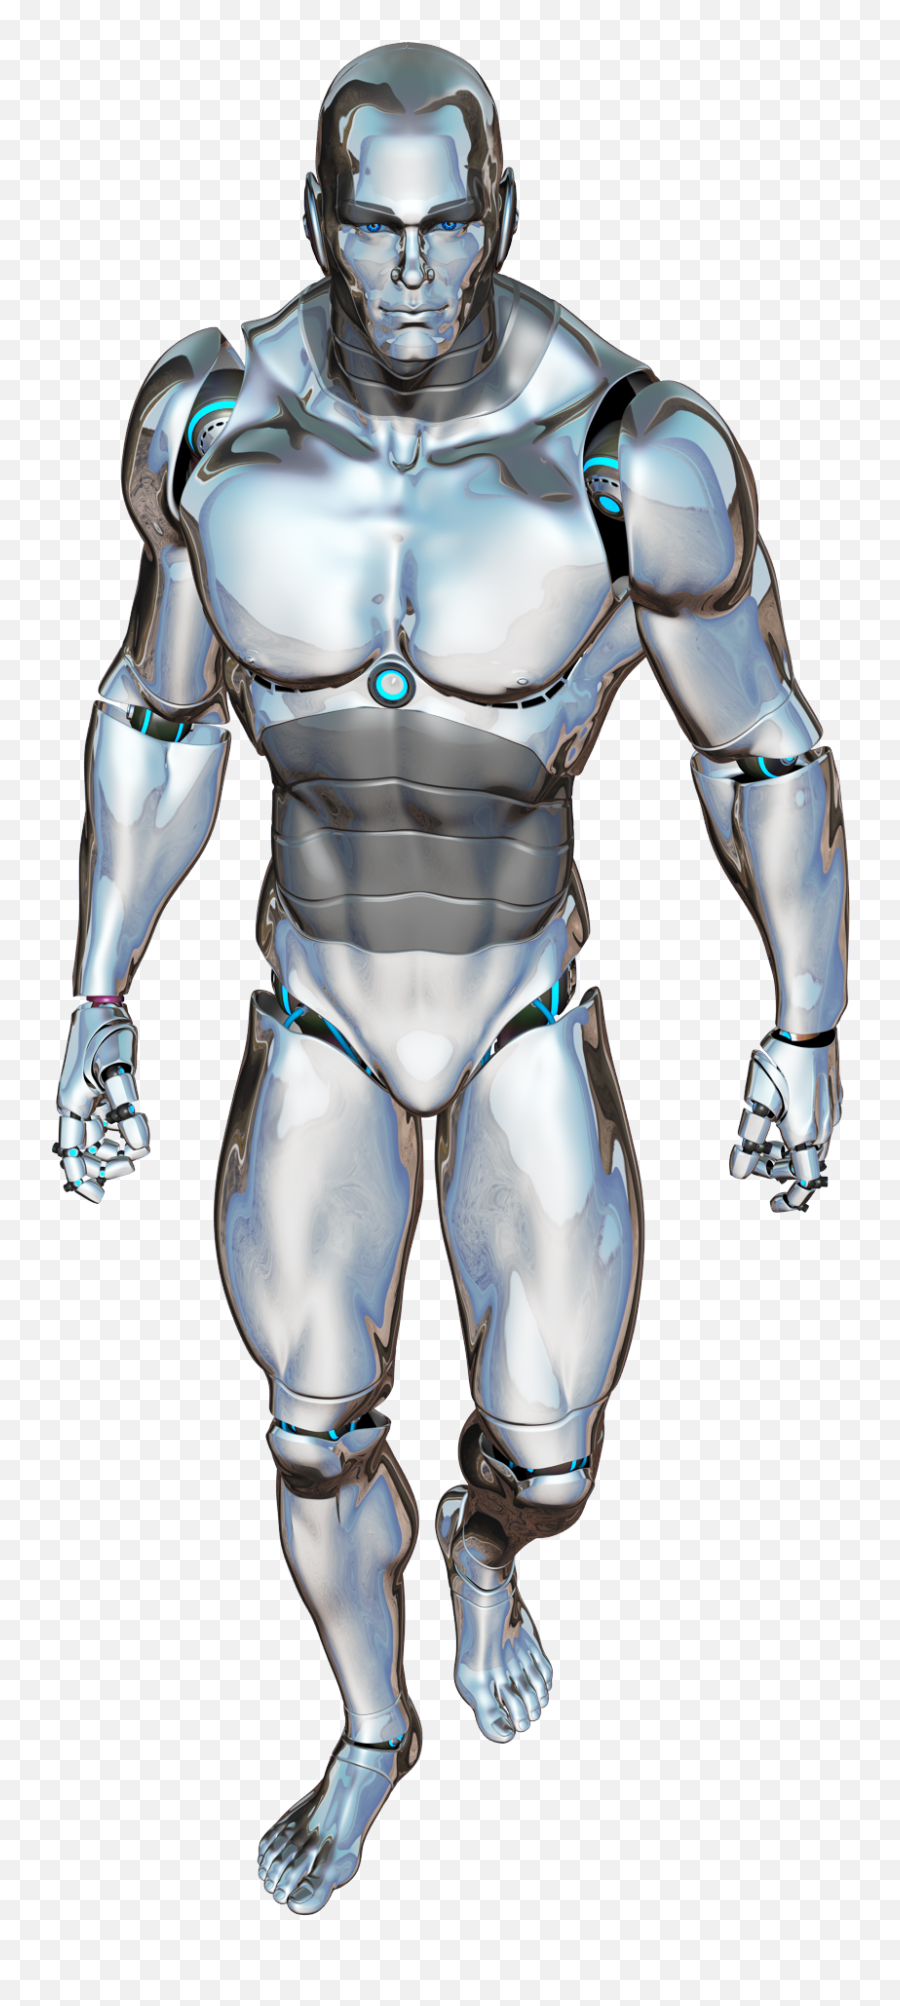 Robot Png Image For Free Download - Human Robot Png,Robot Png